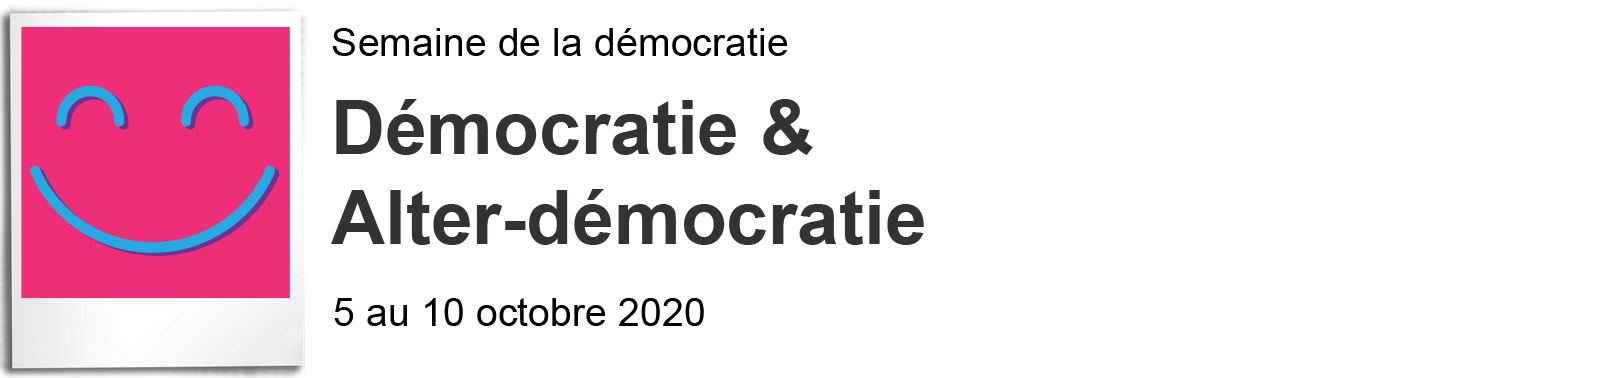 democracy week logo